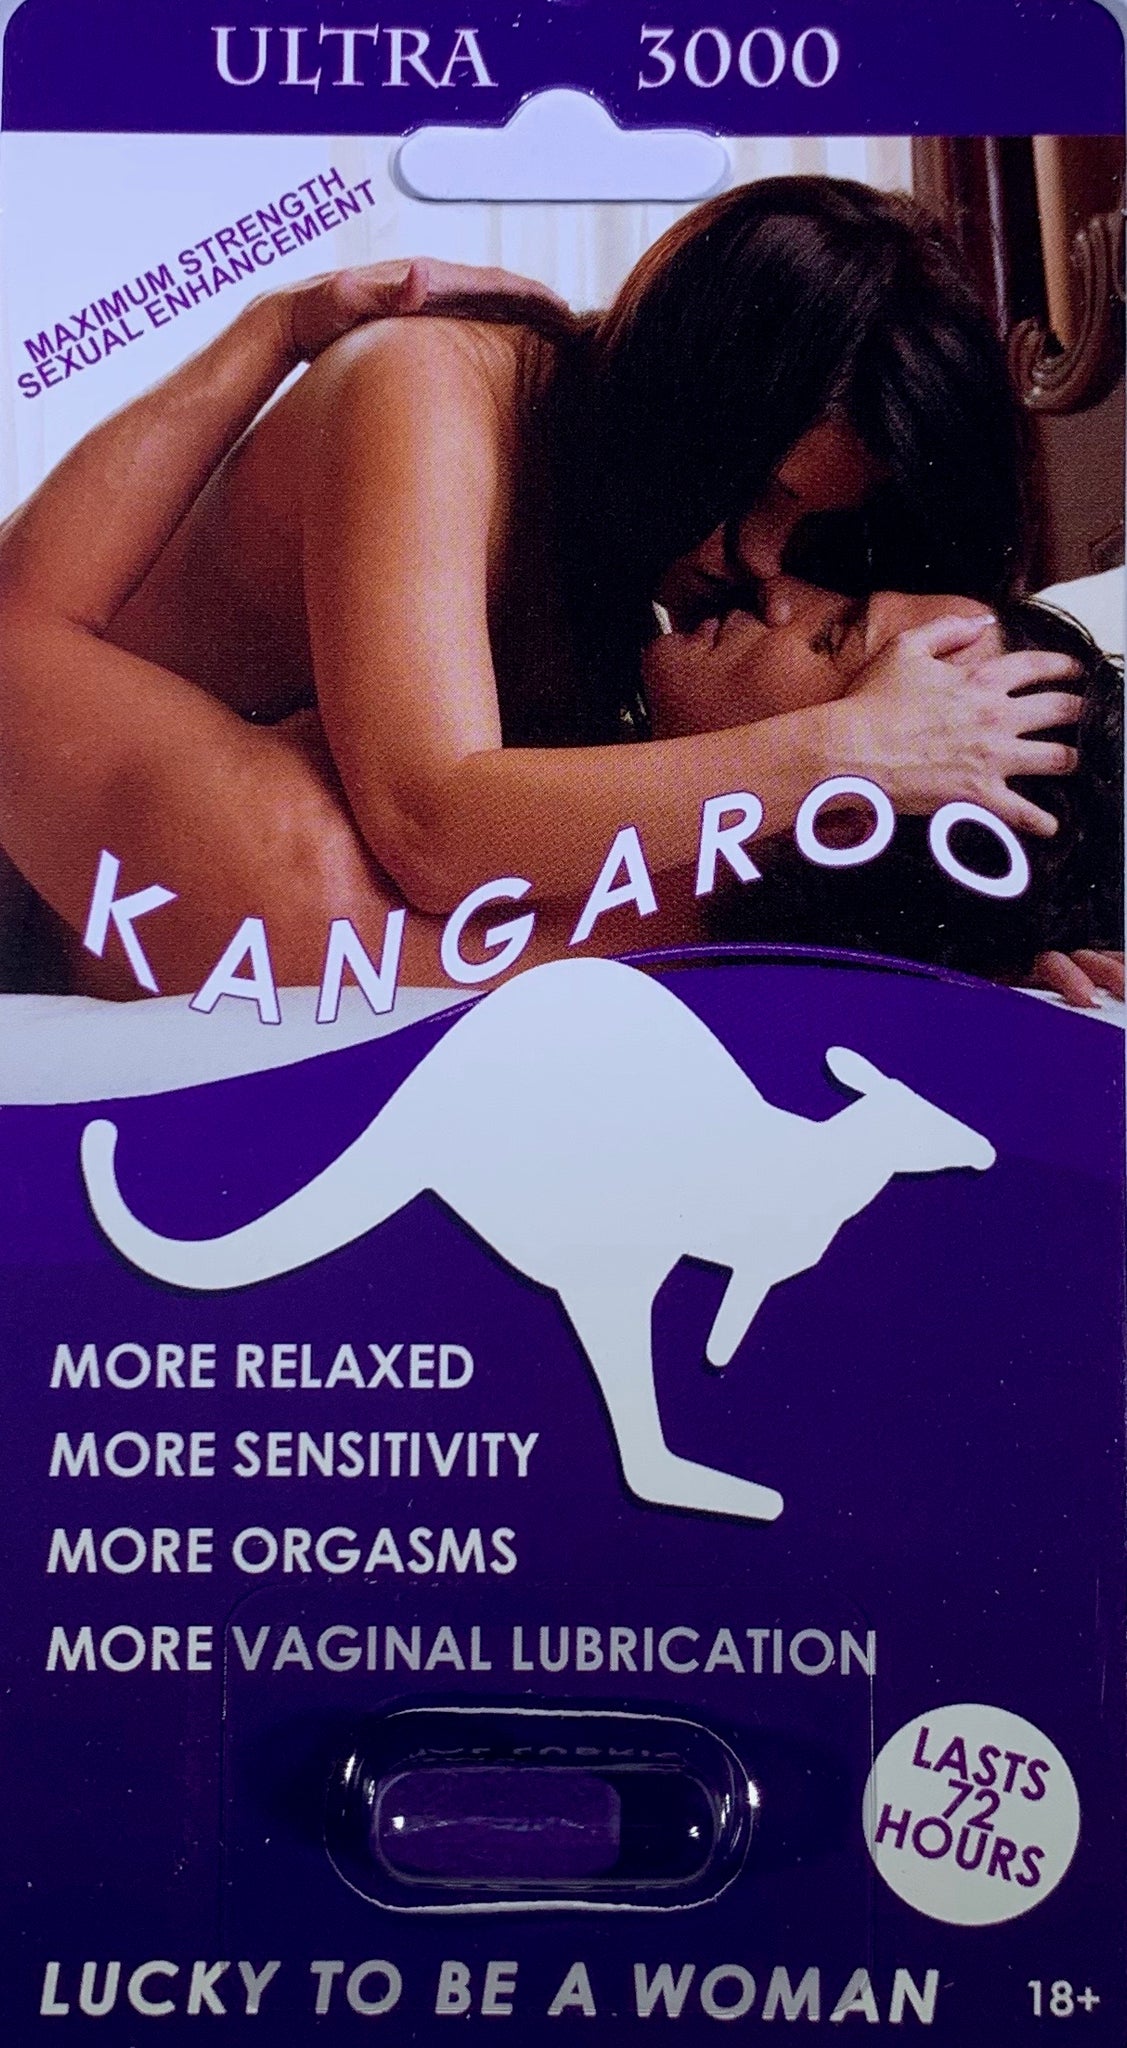 Kangaroo Ultra 3000 Female Enhancement